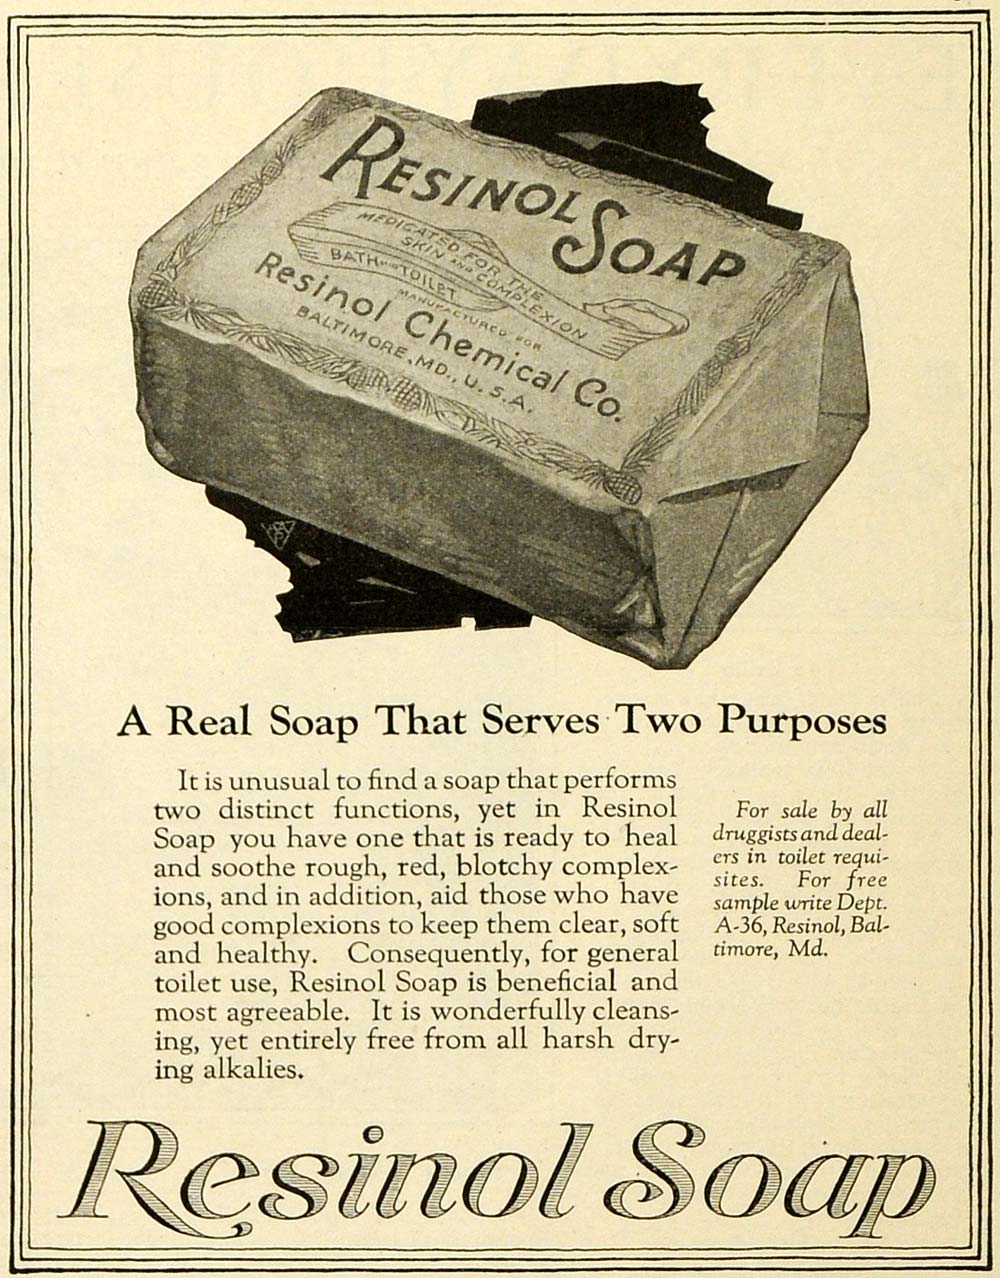 1918 Ad Resinol Soap Baltimore Maryland Bathroom Hygiene Sink Skin